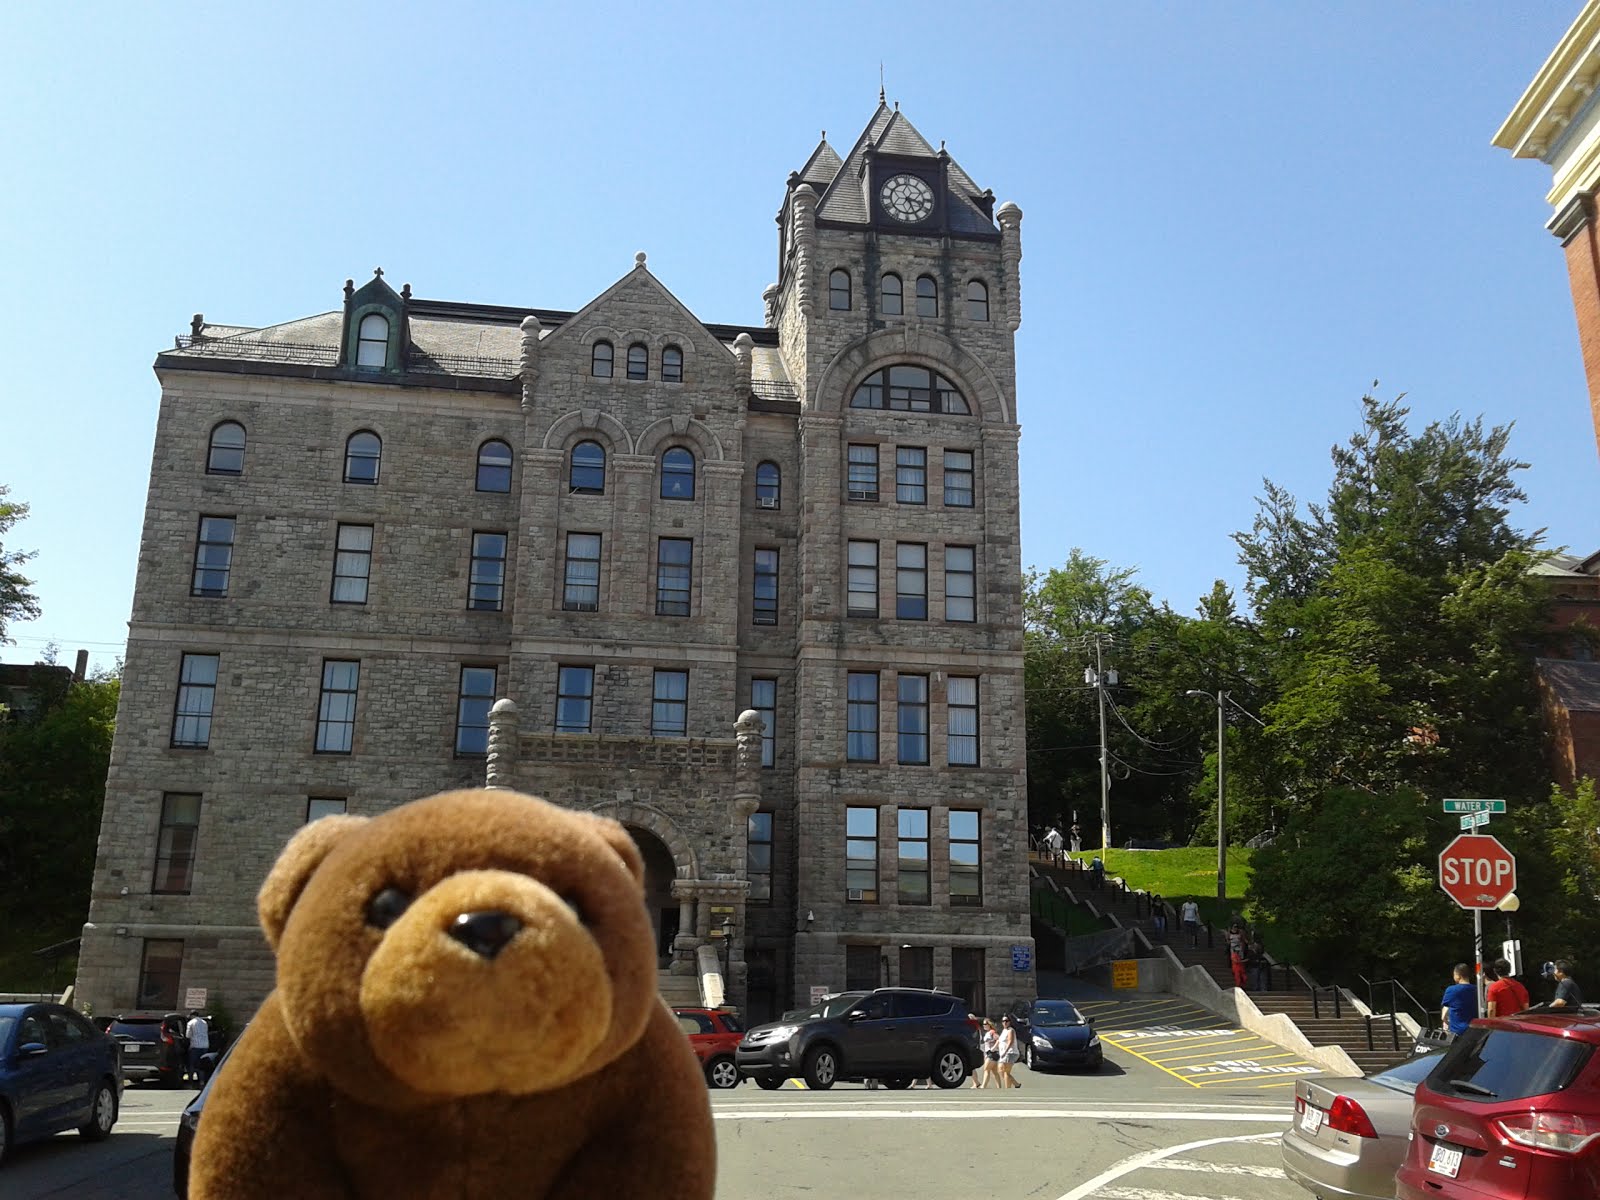 Teddy Bear in St.John's, Canada